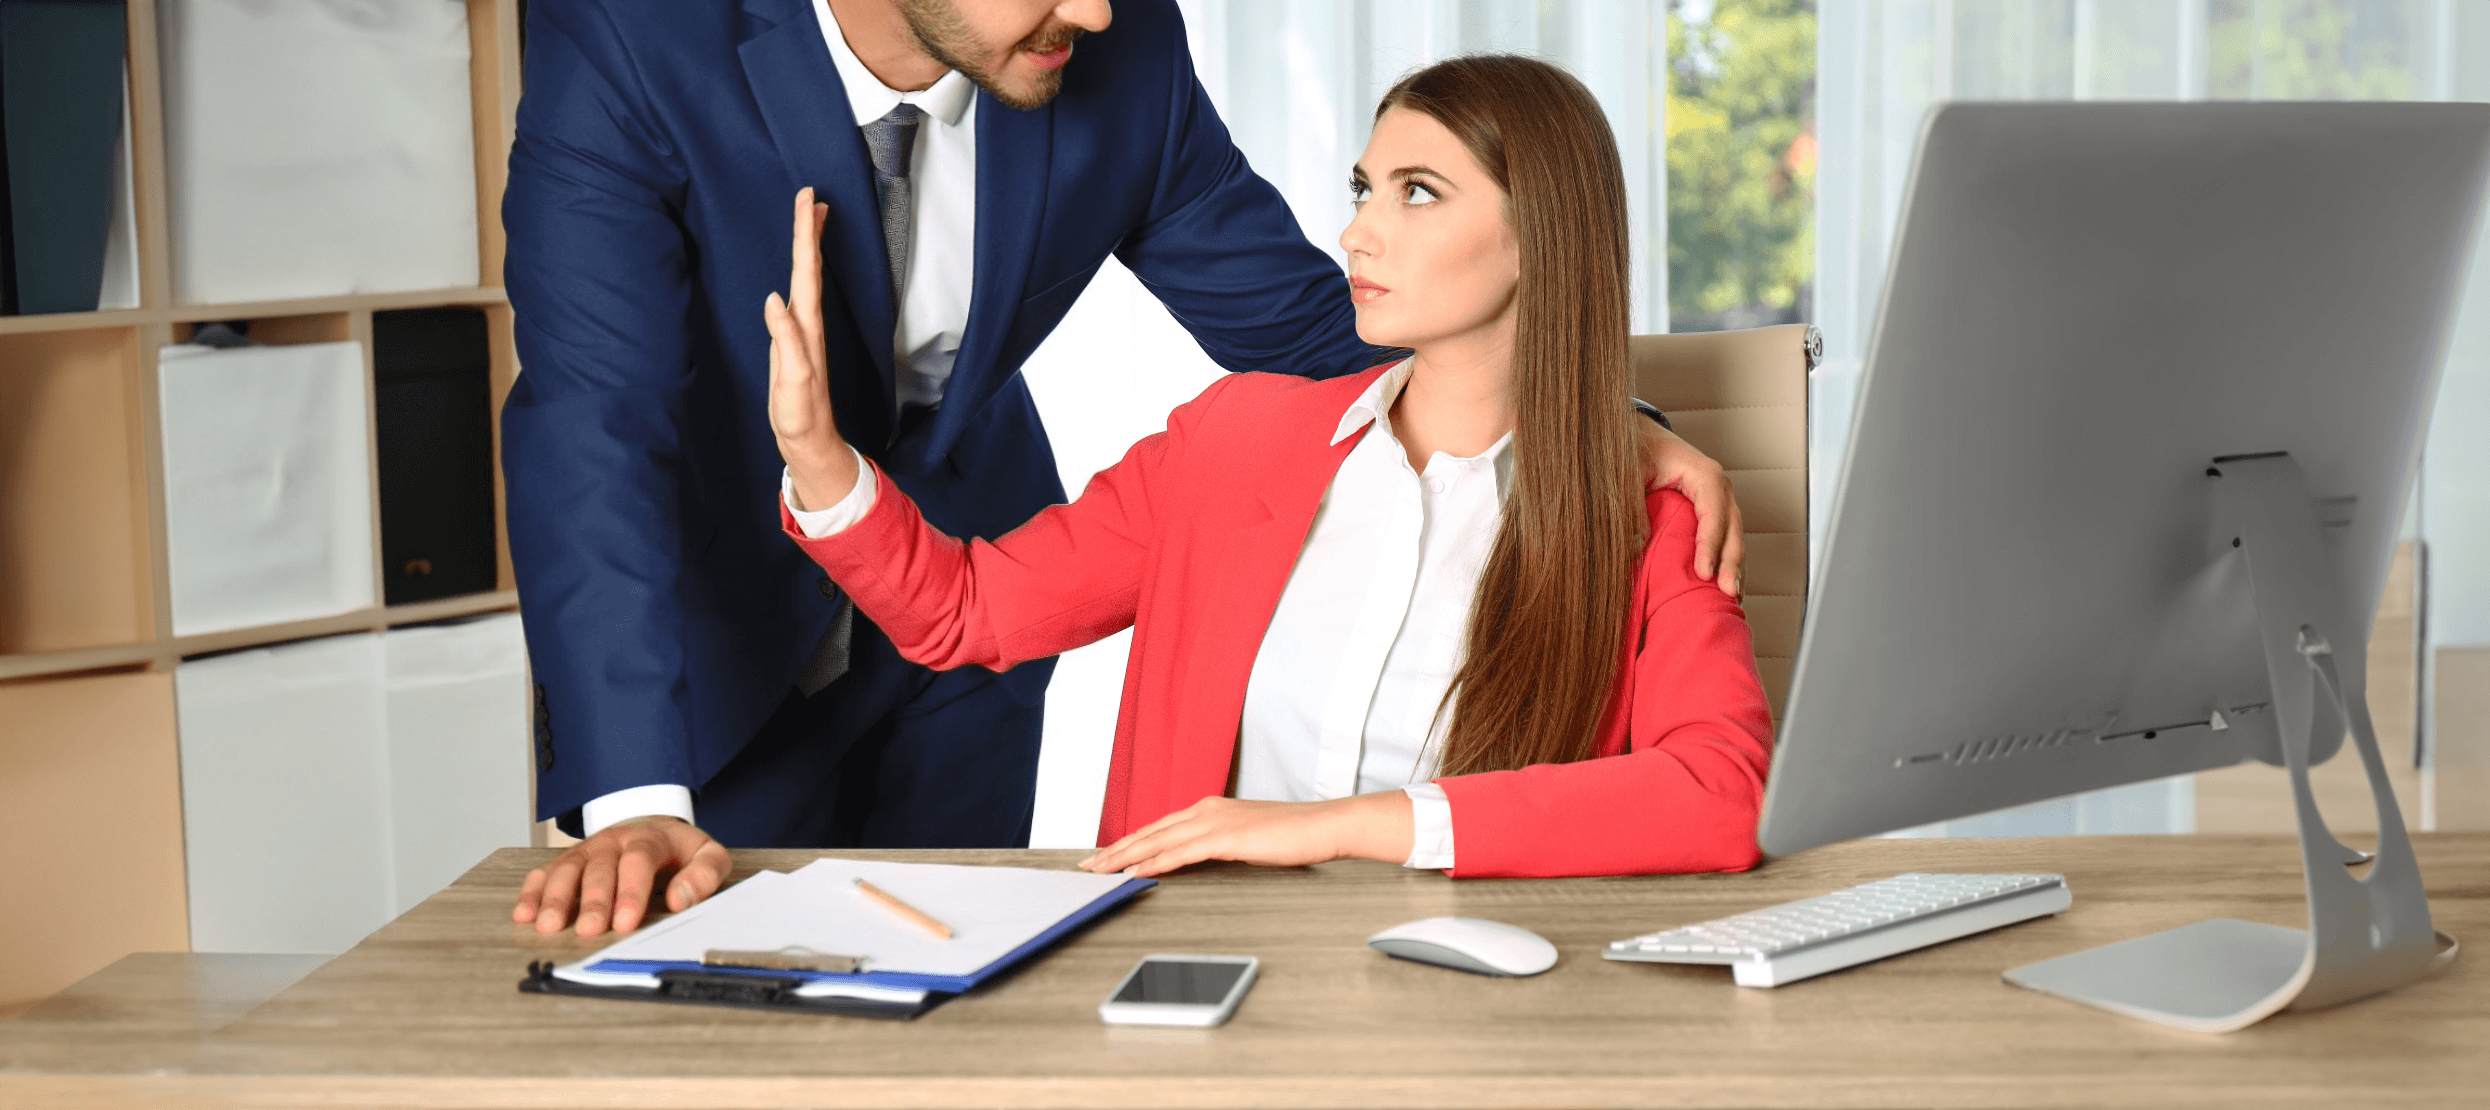 Understanding Delaware's Workplace Harassment Laws